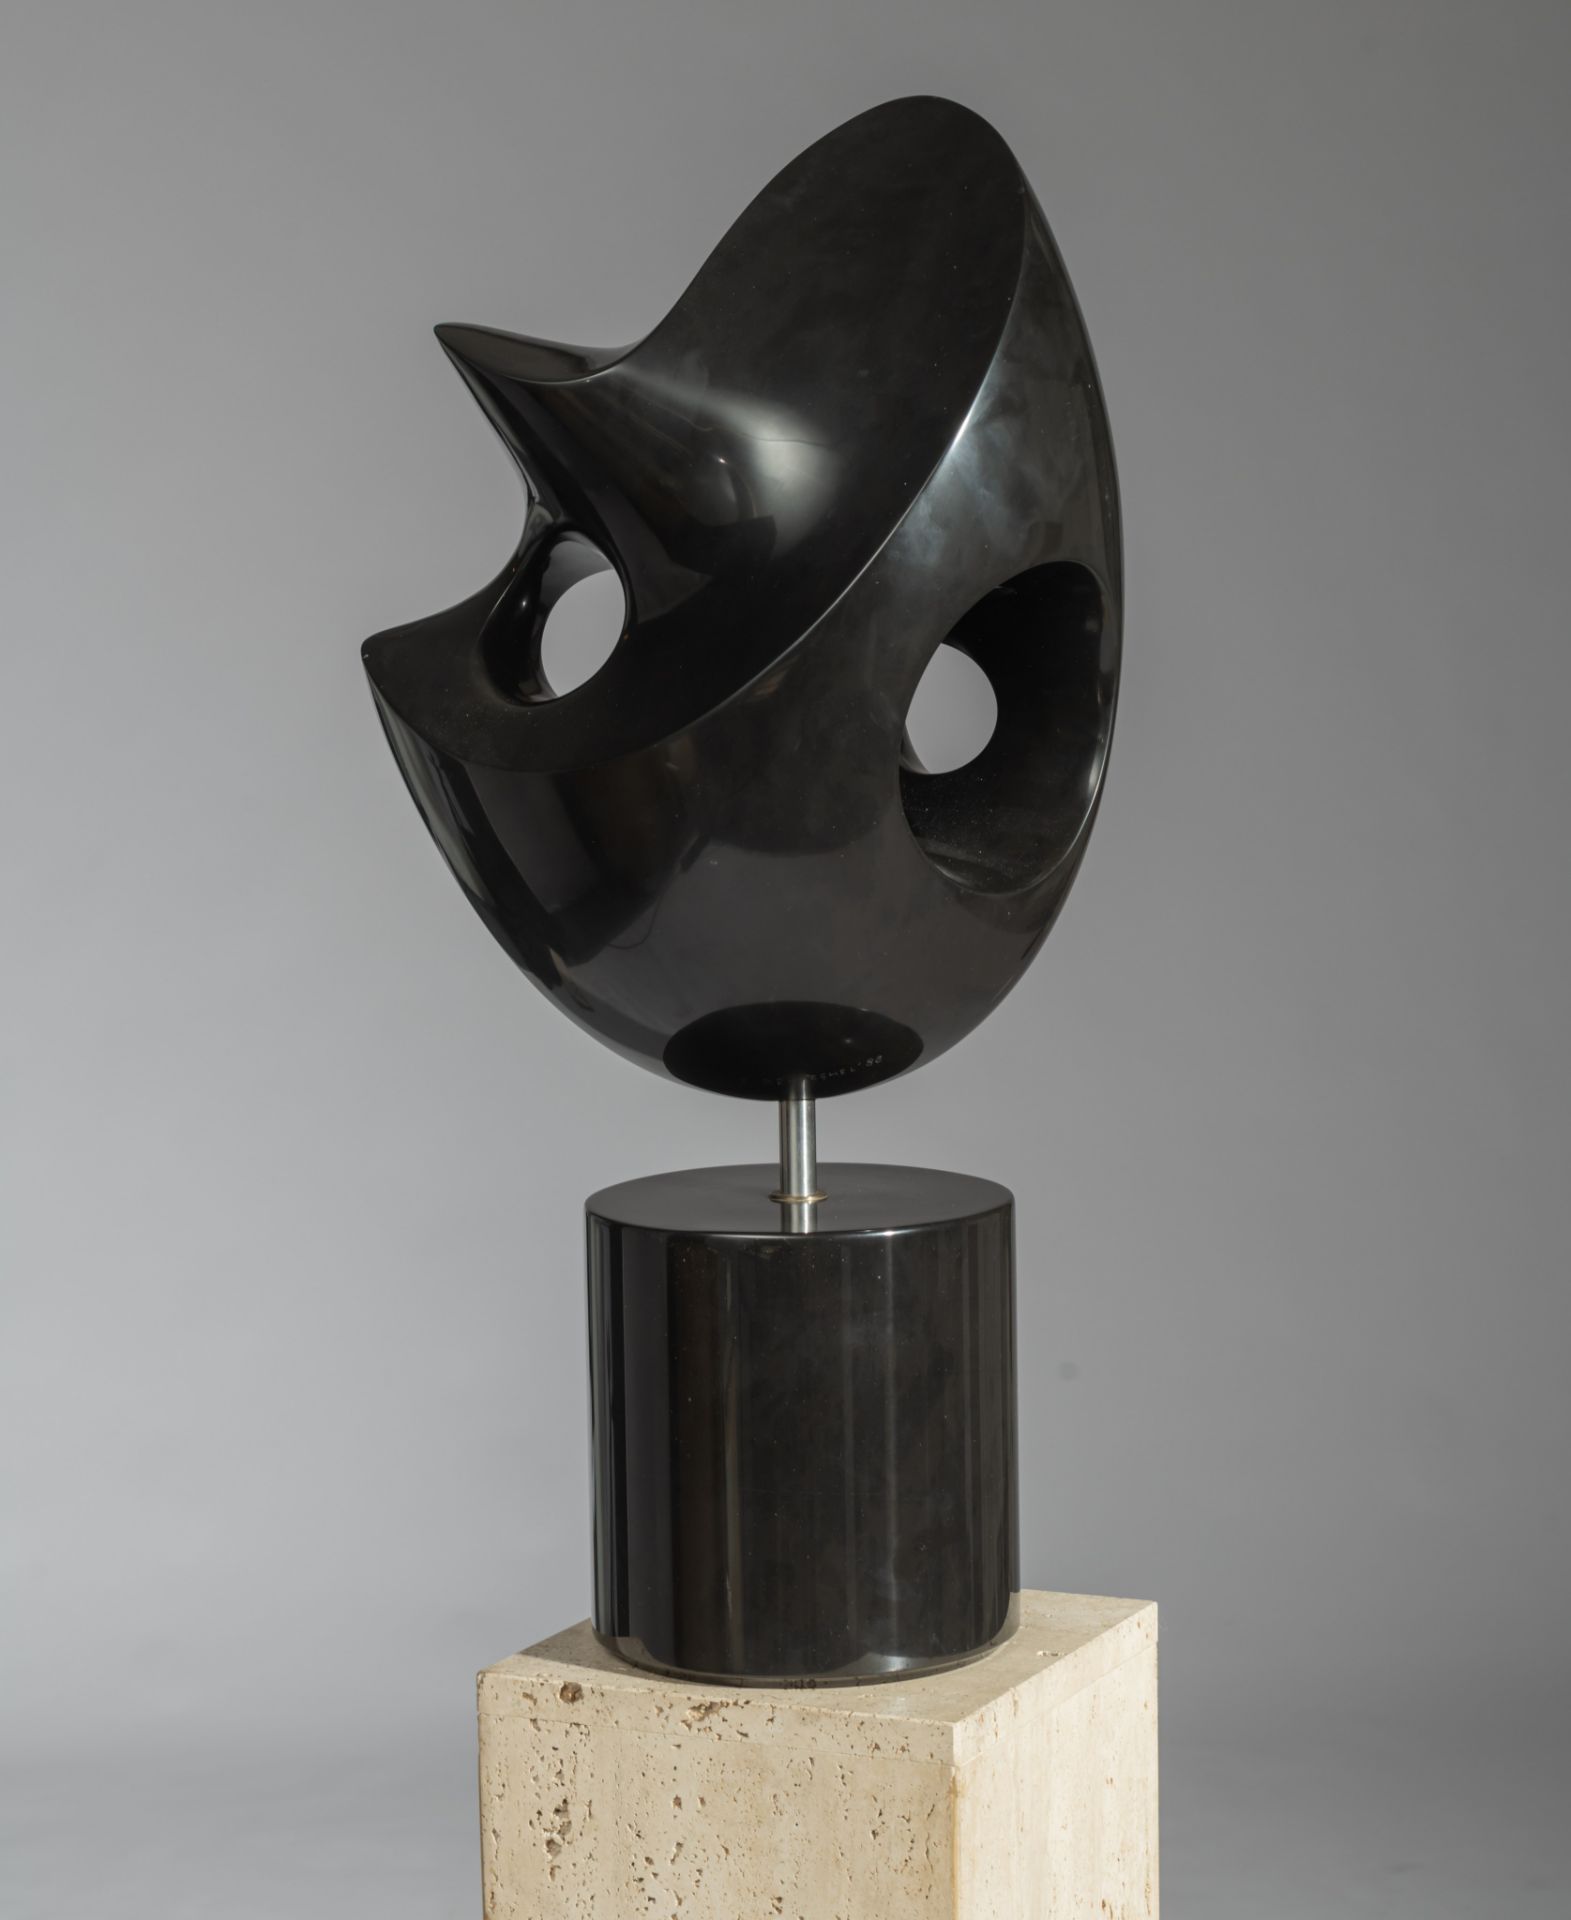 Jeanine Behaeghel (1940-1993), abstract sculpture, 1988, noir Belge marble on a travertine pedestal, - Image 6 of 18